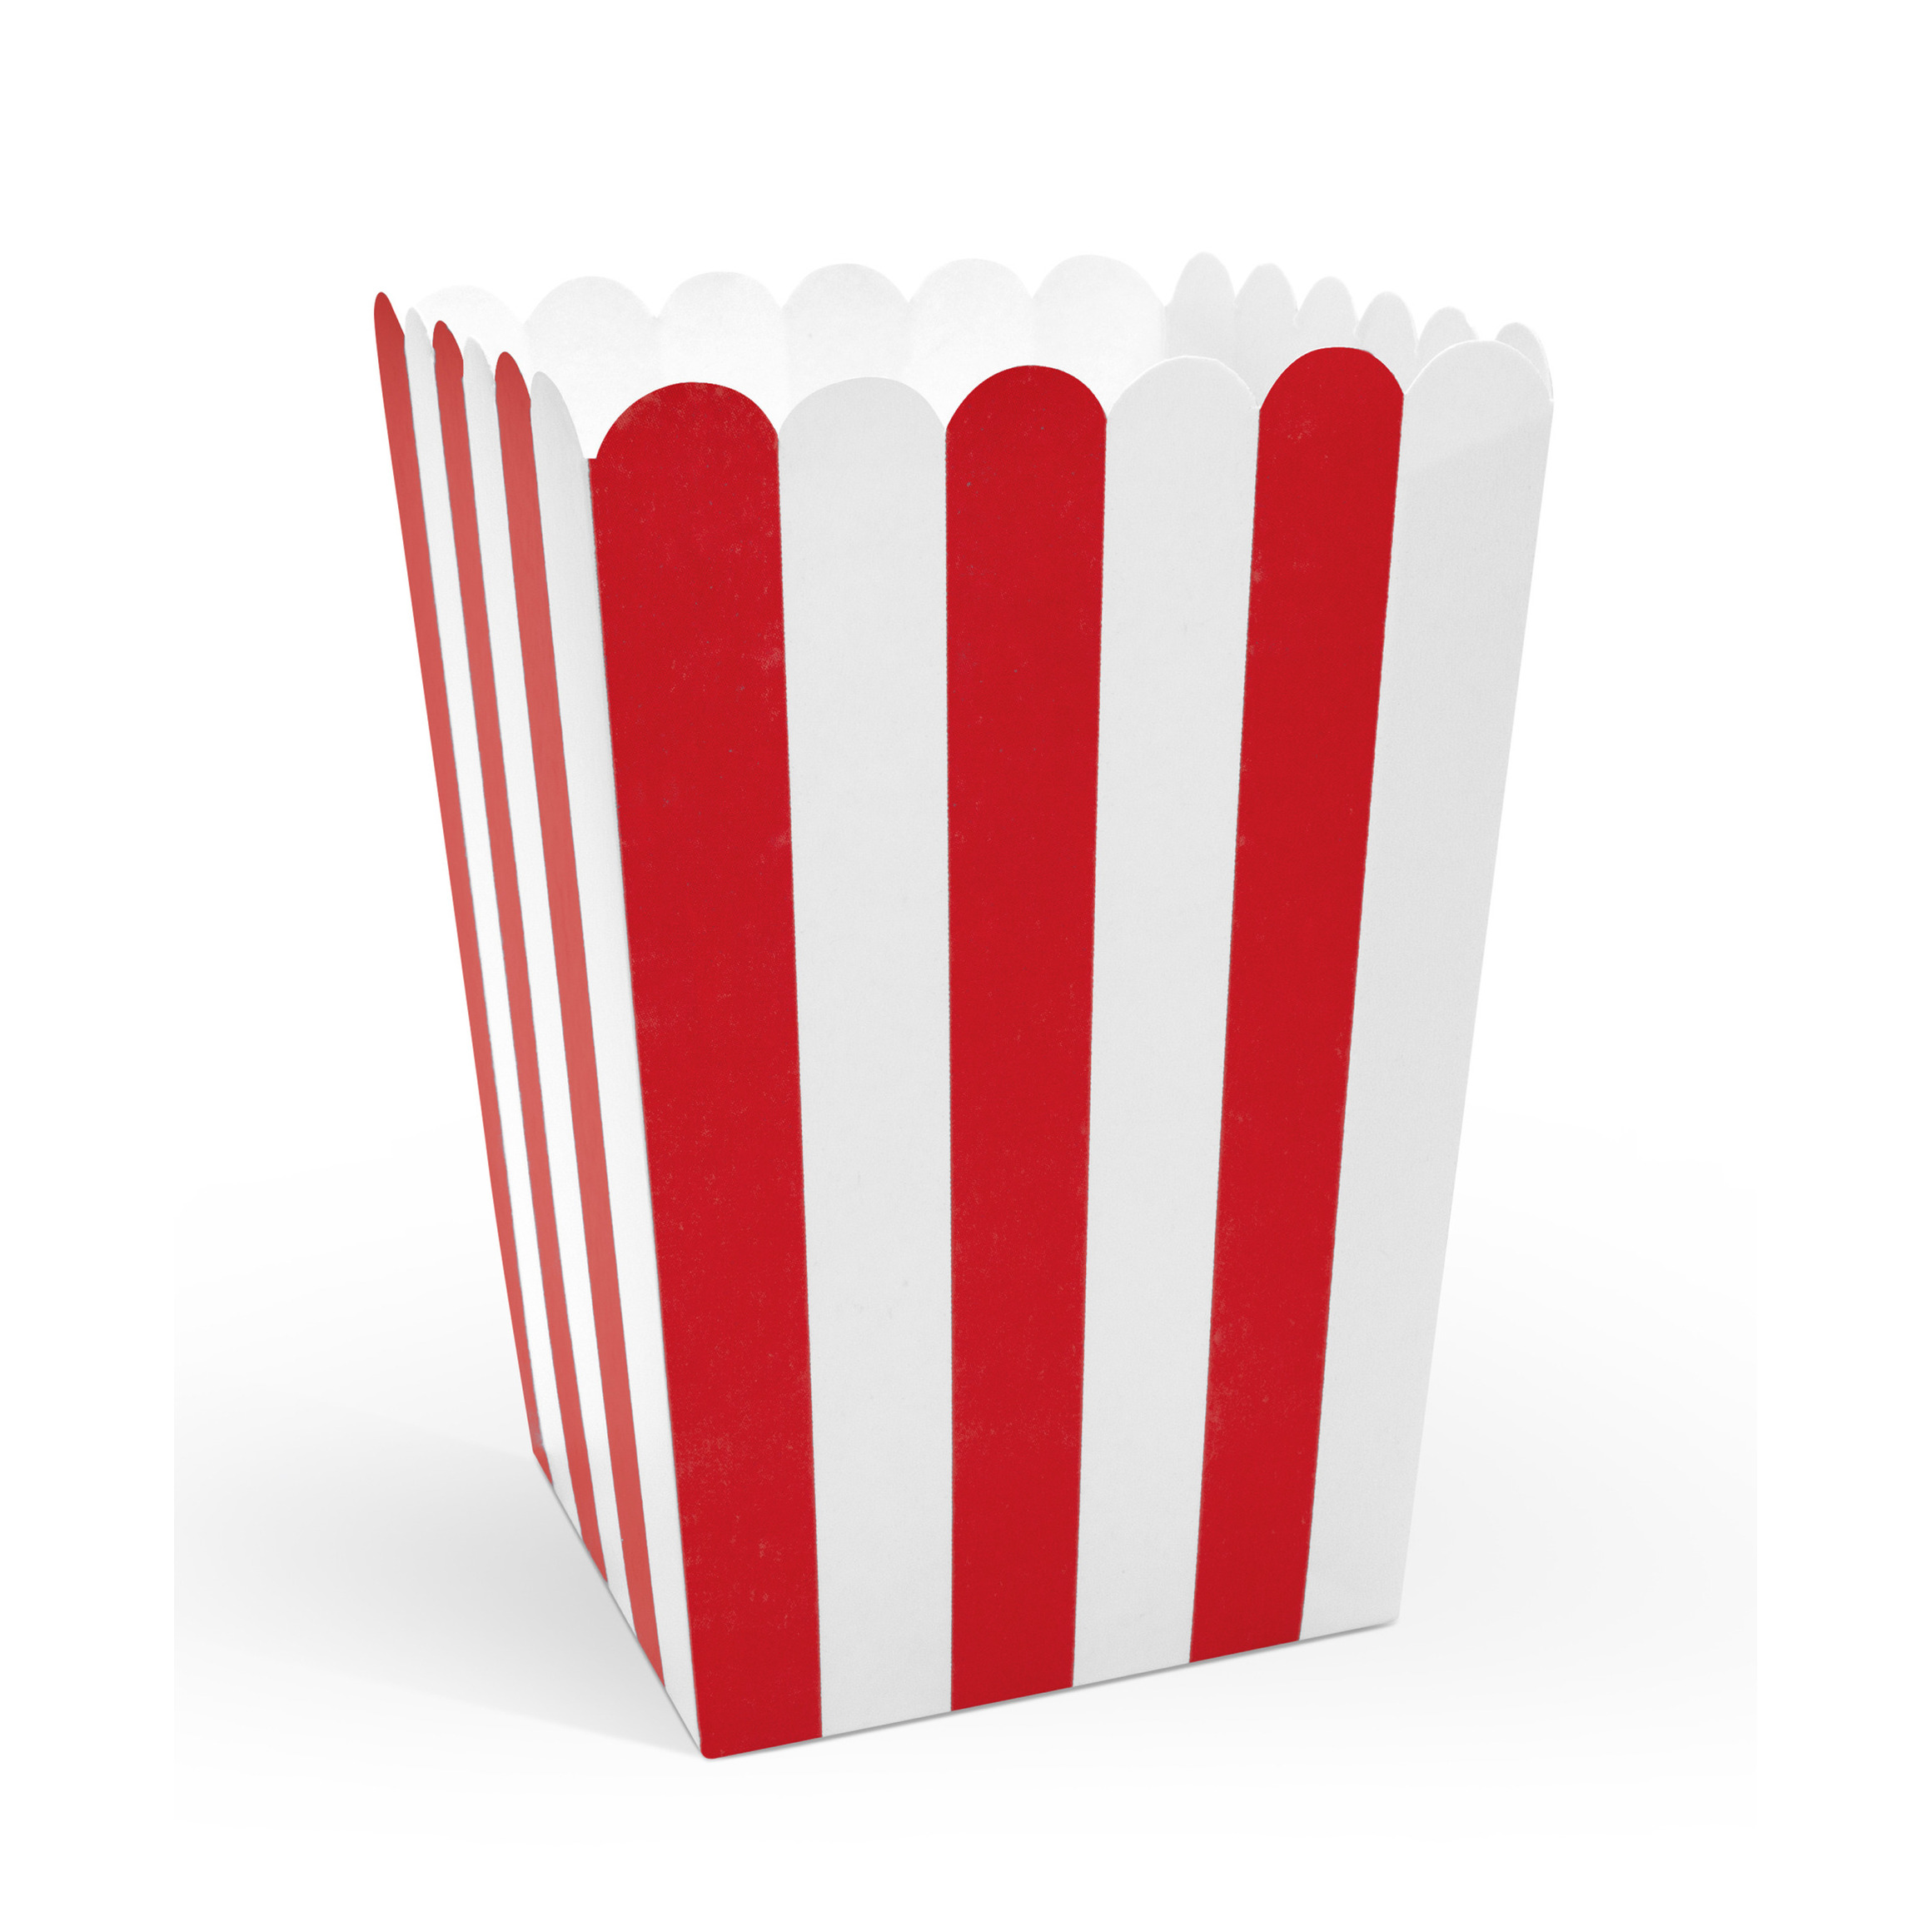 Popcorn-snoep bakjes 6x rood gestreept karton 7 x 7 x 12 cm feest uitdeel bakjes